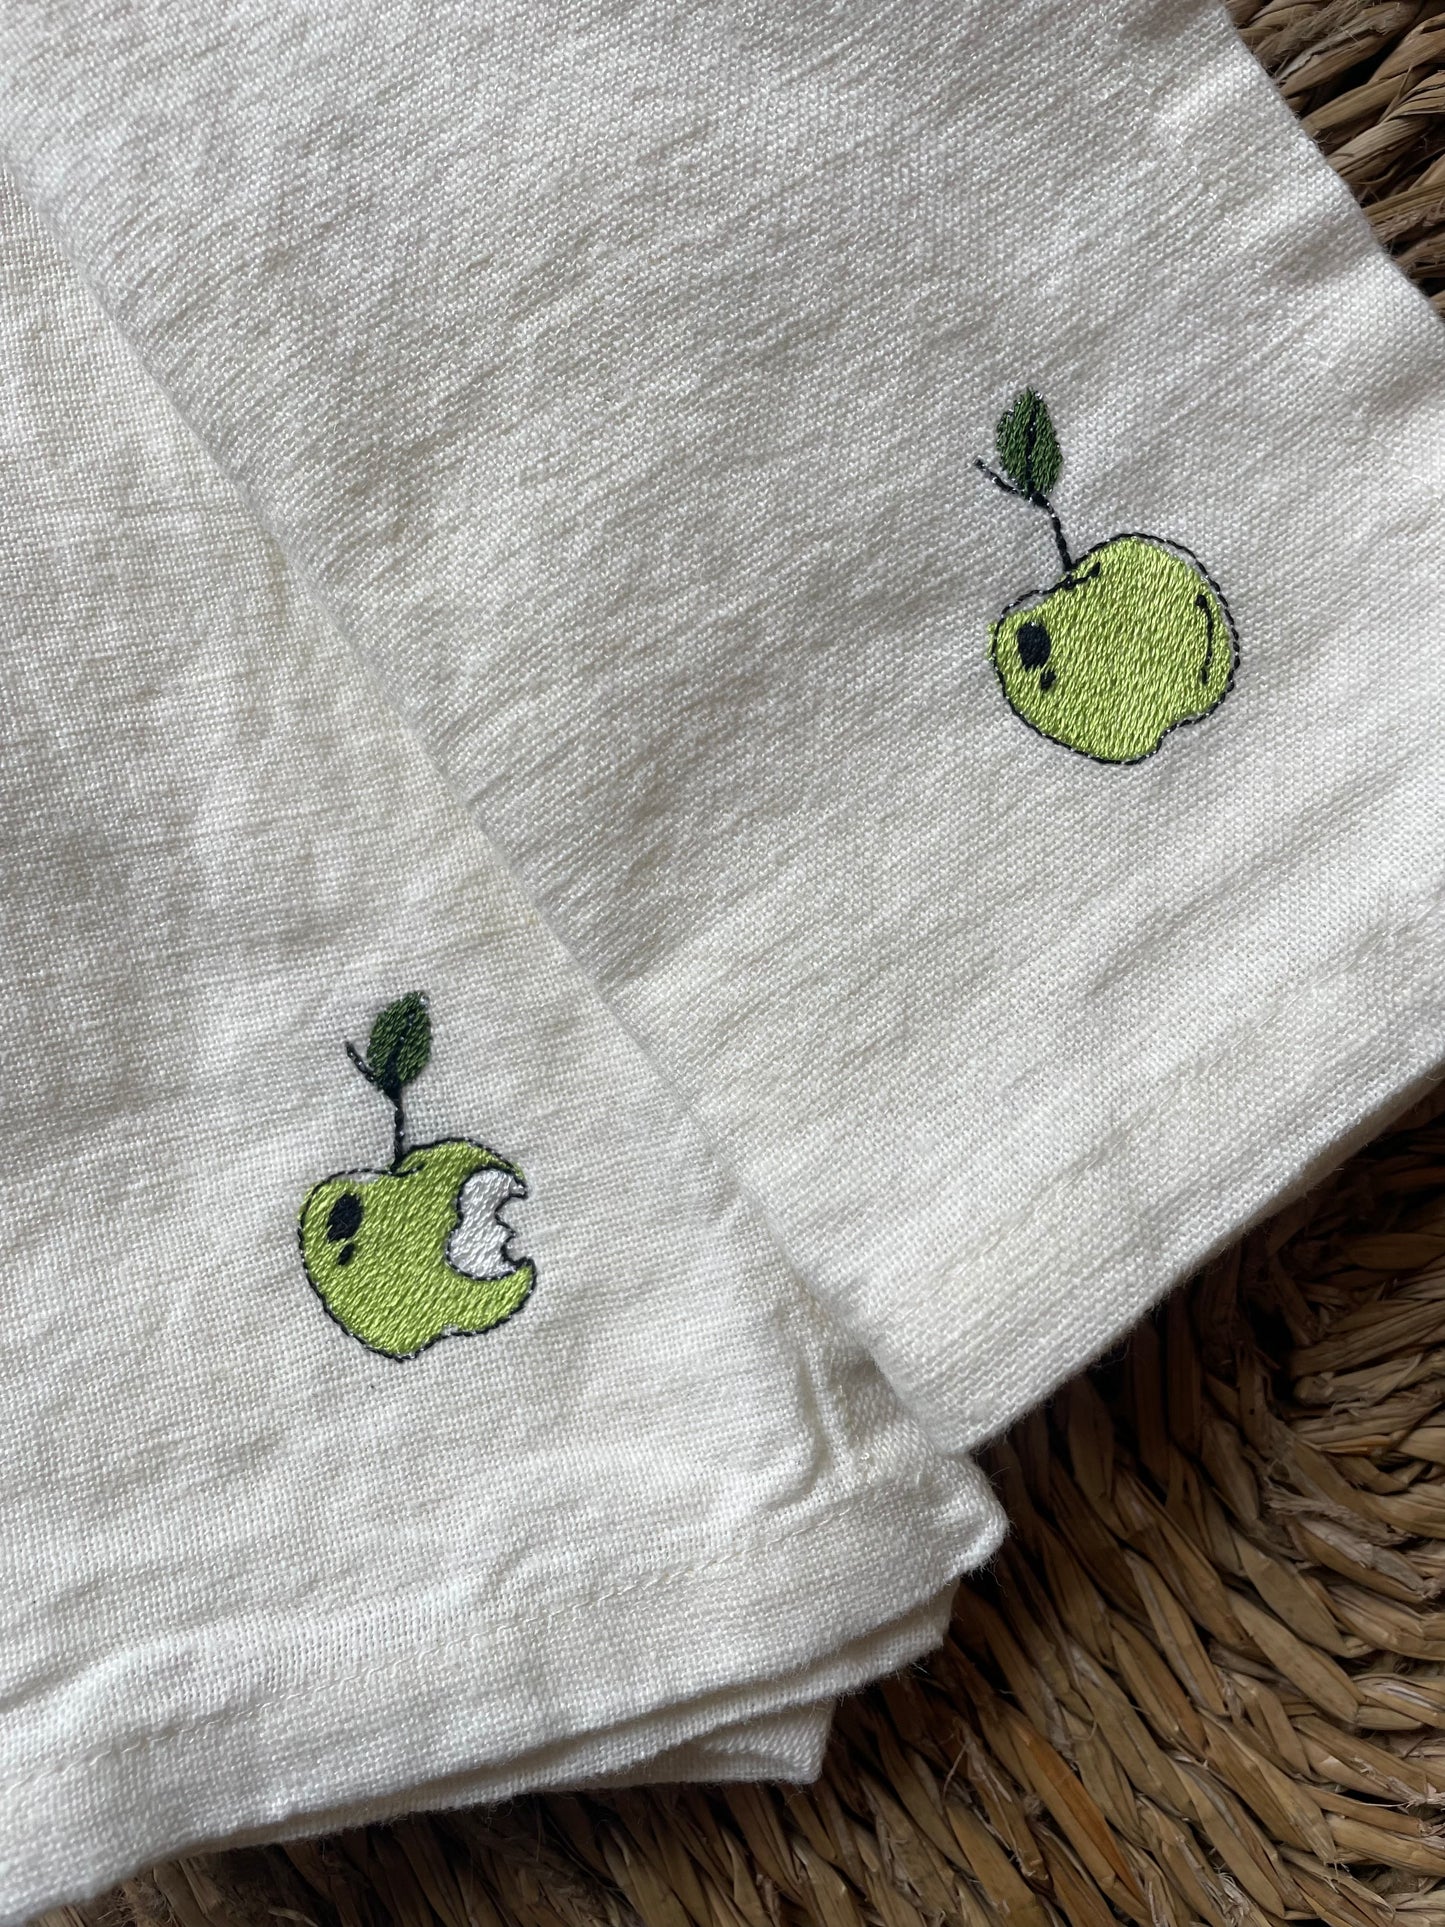 Embroidered Apple Napkins